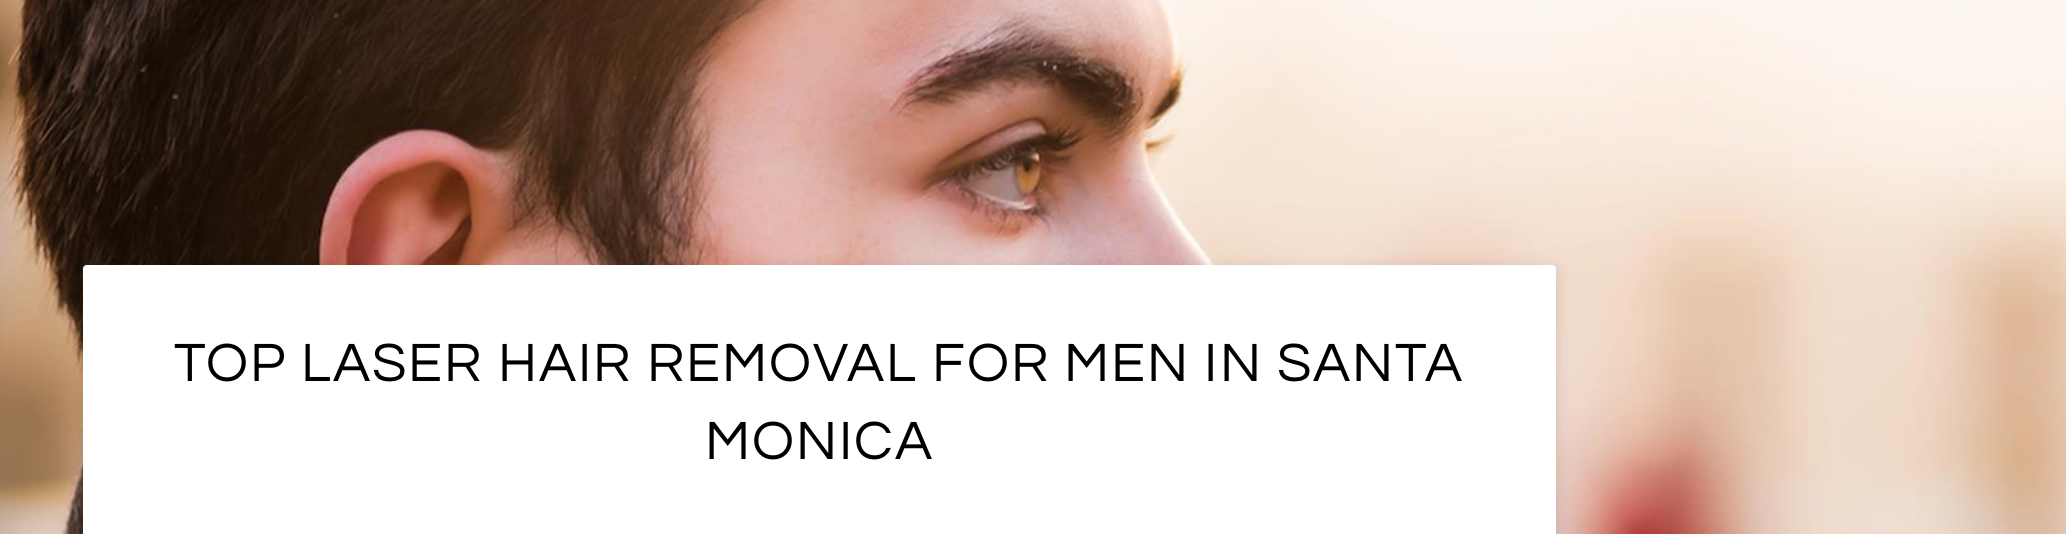 Laser Hair removal for men on Montana Avenue in Santa Monica